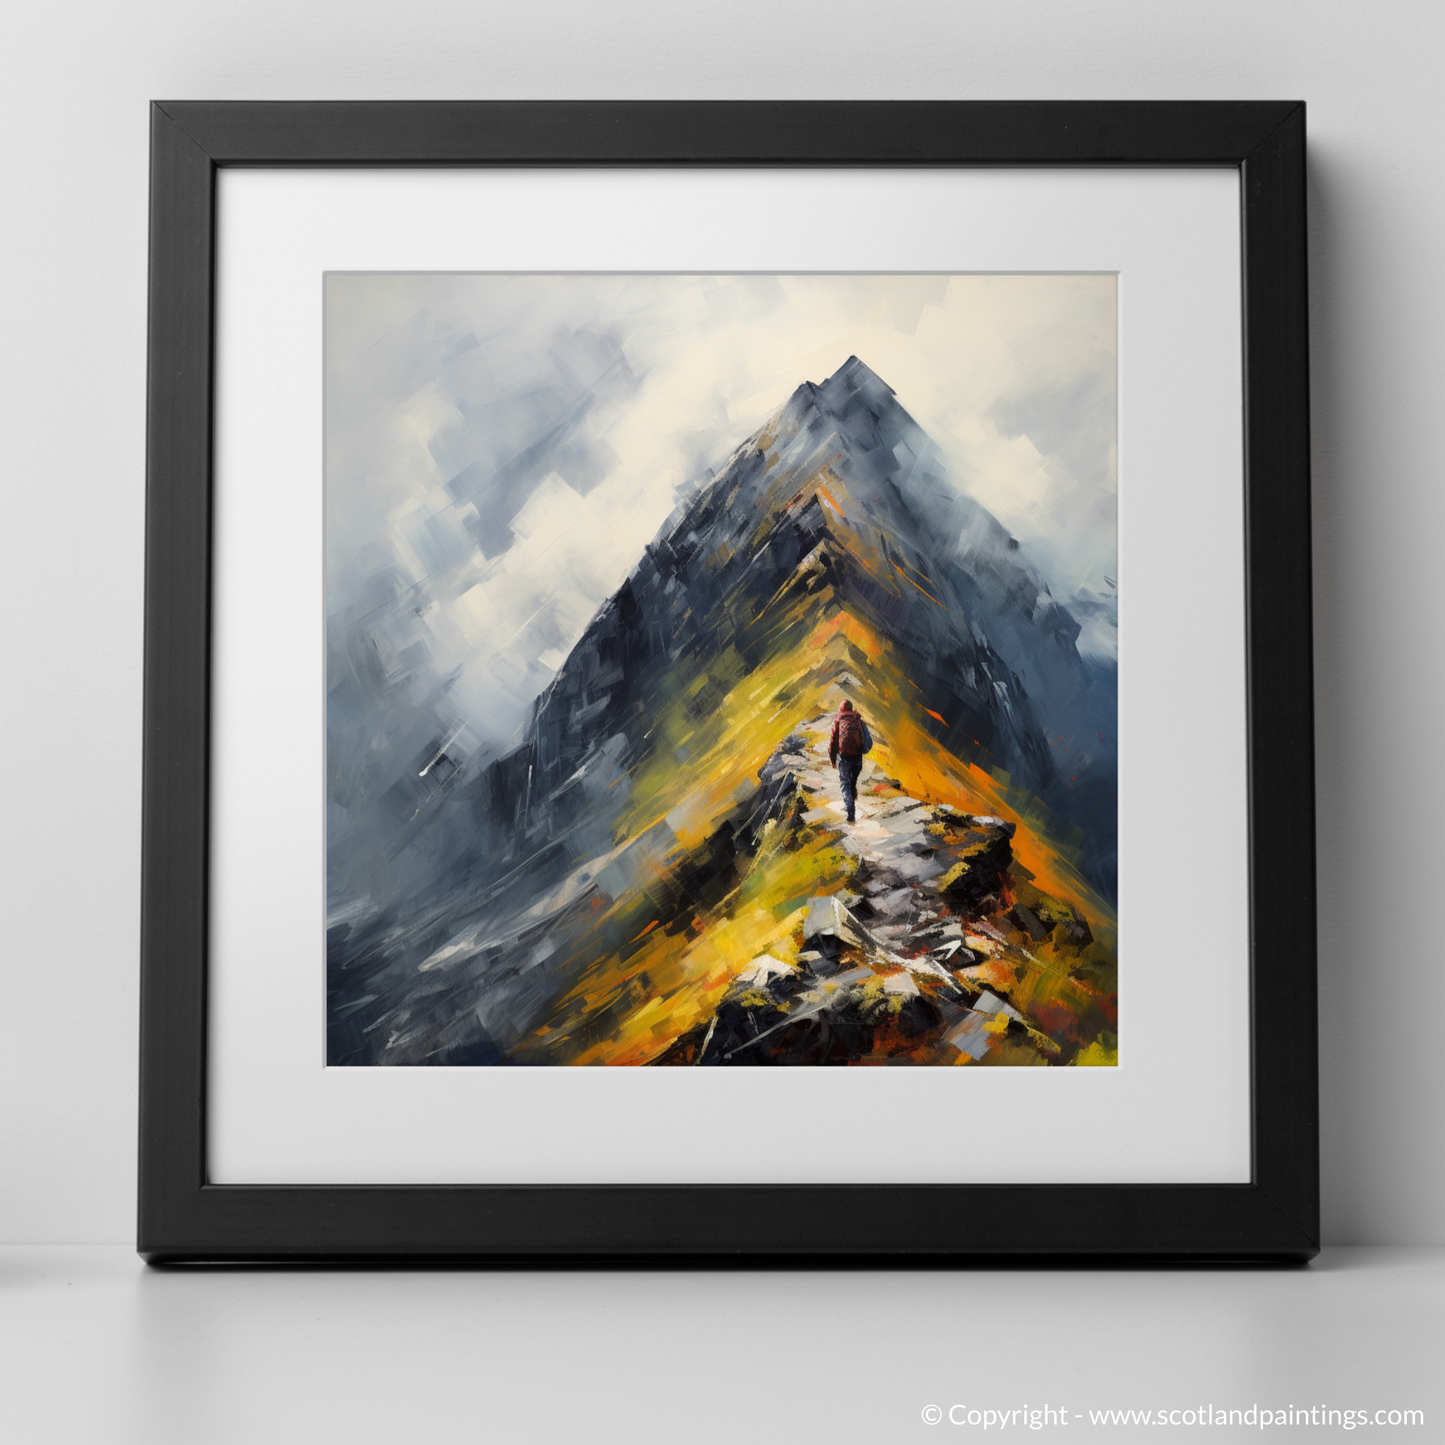 Art Print of Climber ascending misty peak in Glencoe with a black frame